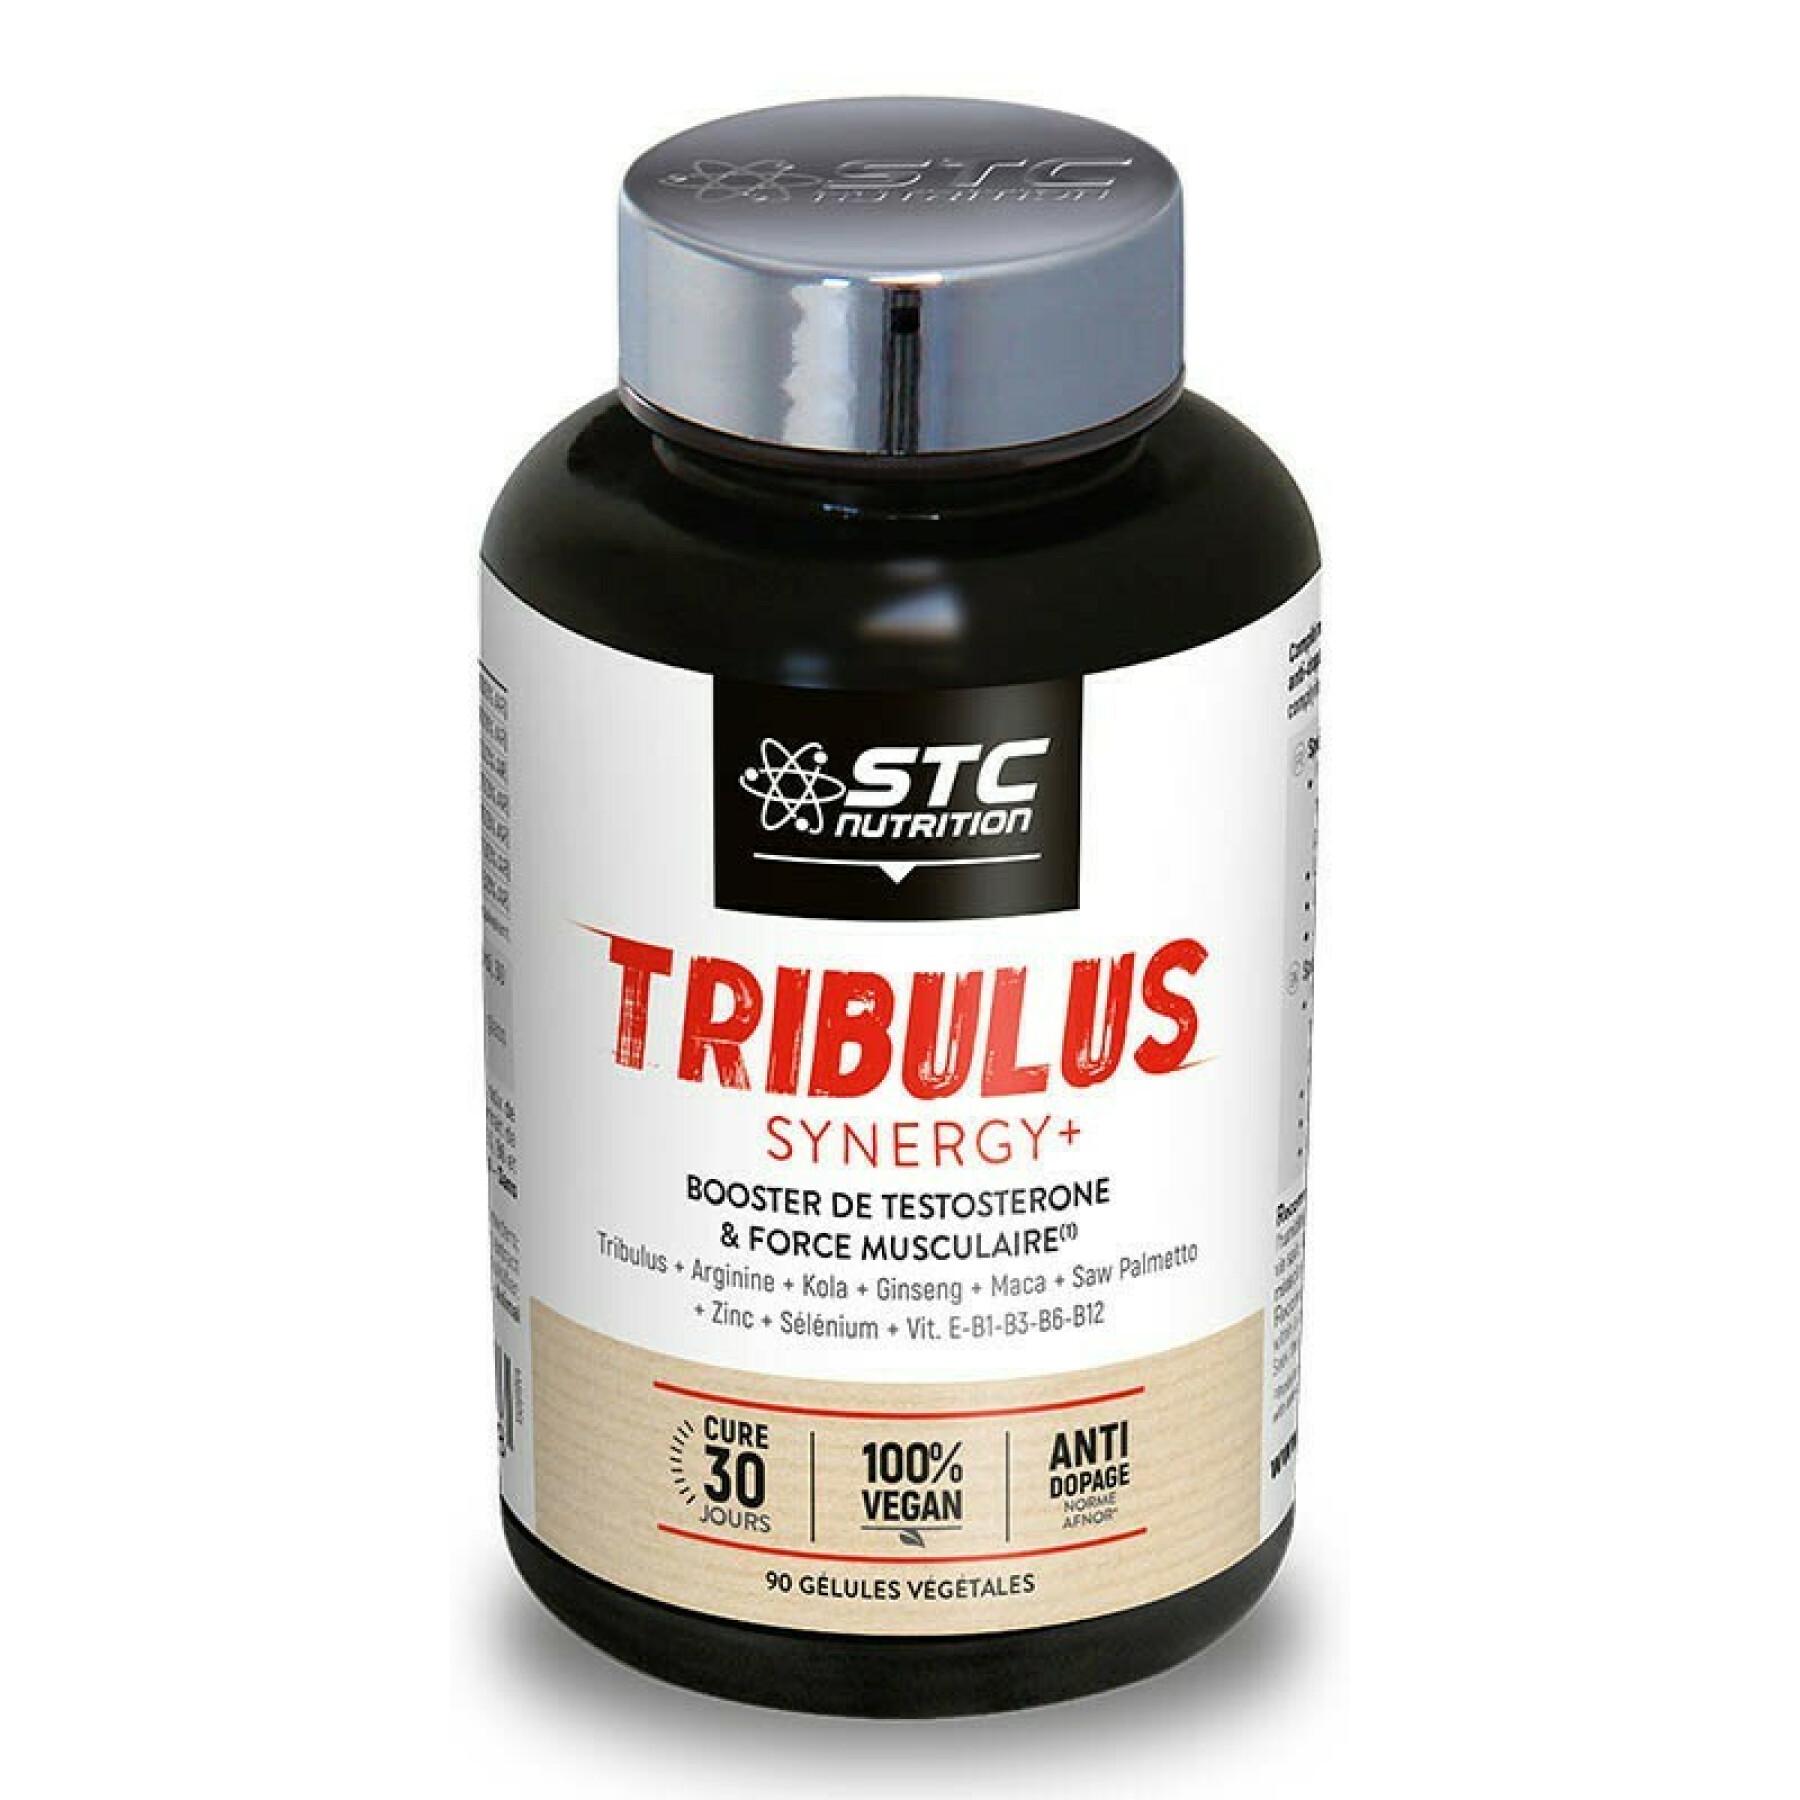 Tribulus synergy+ booster testosteronu i siły mięśni STC Nutrition - 90 gélules végétales